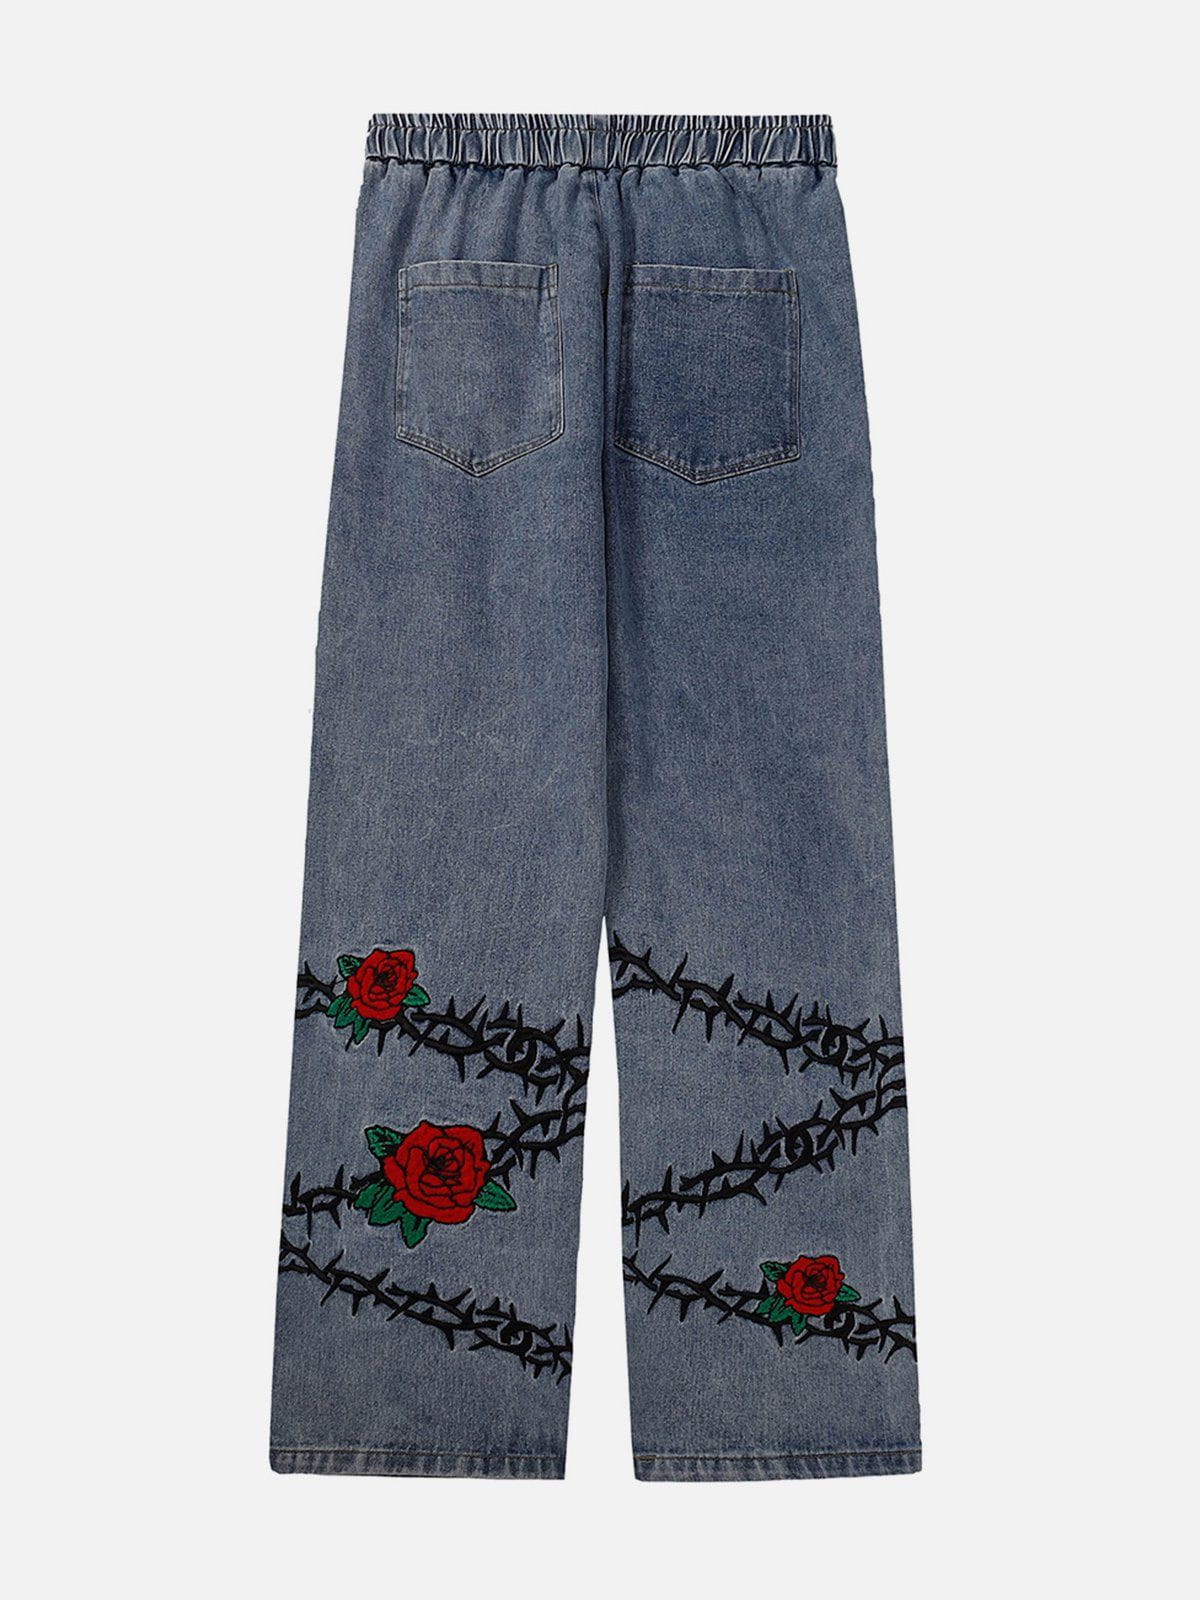 Eprezzy® - Embroidery Thorns Rose Jeans Streetwear Fashion - eprezzy.com